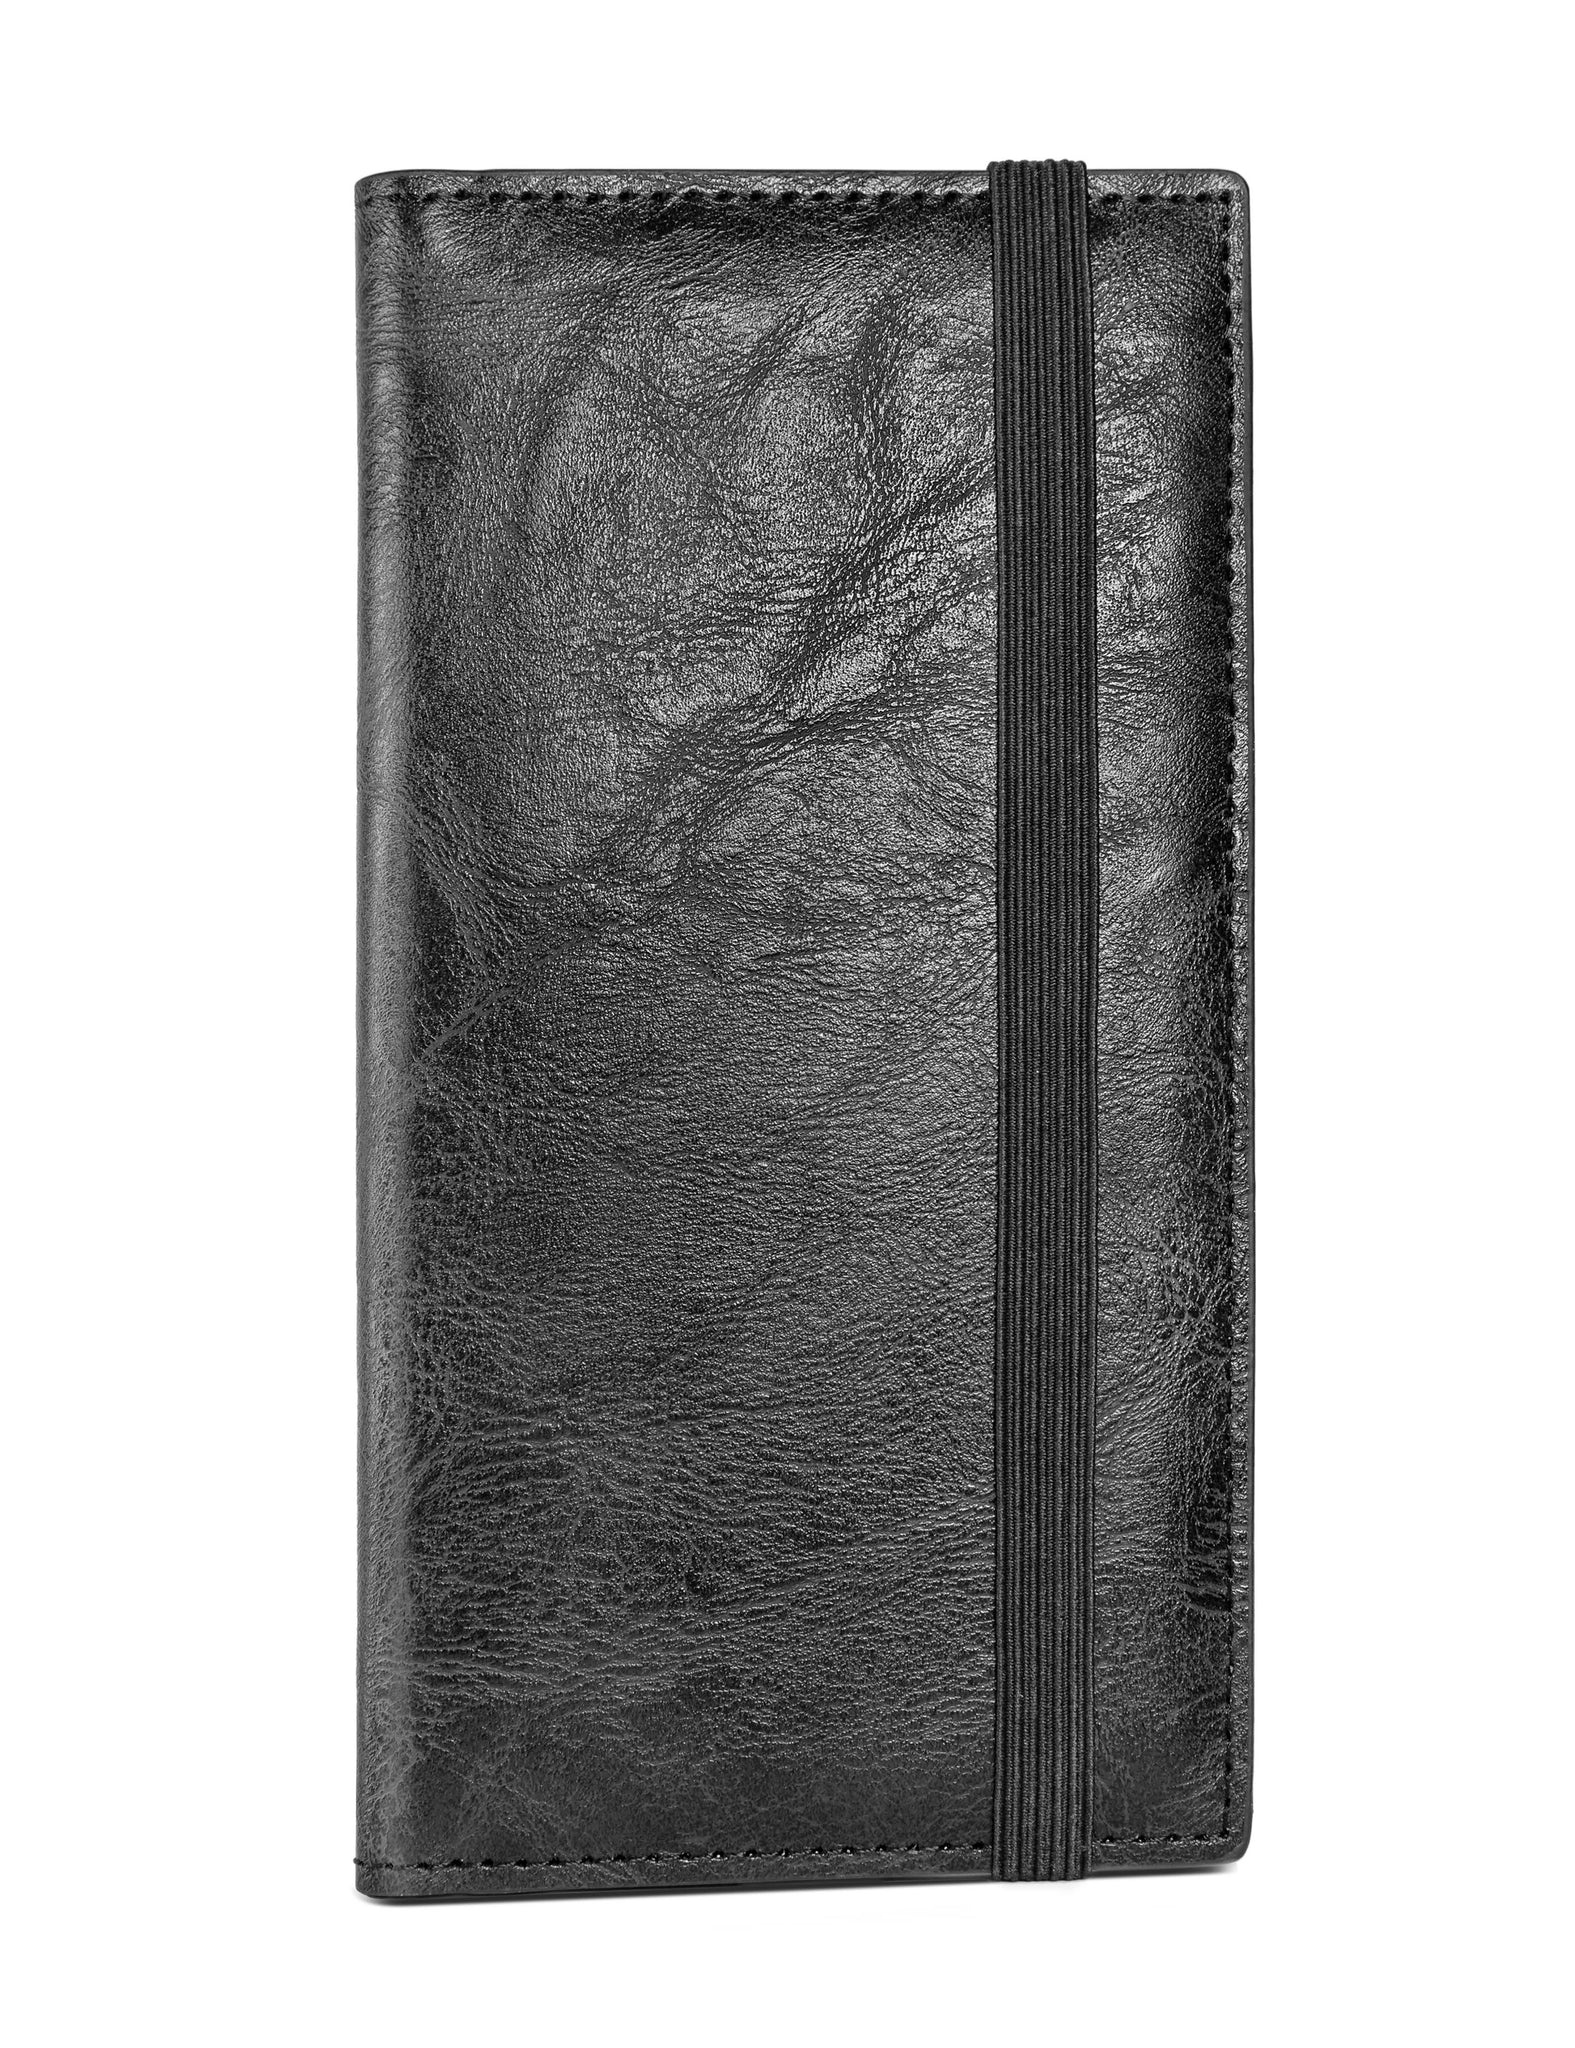 7"x3.7" Black Vegan Leather Checkbook Cover